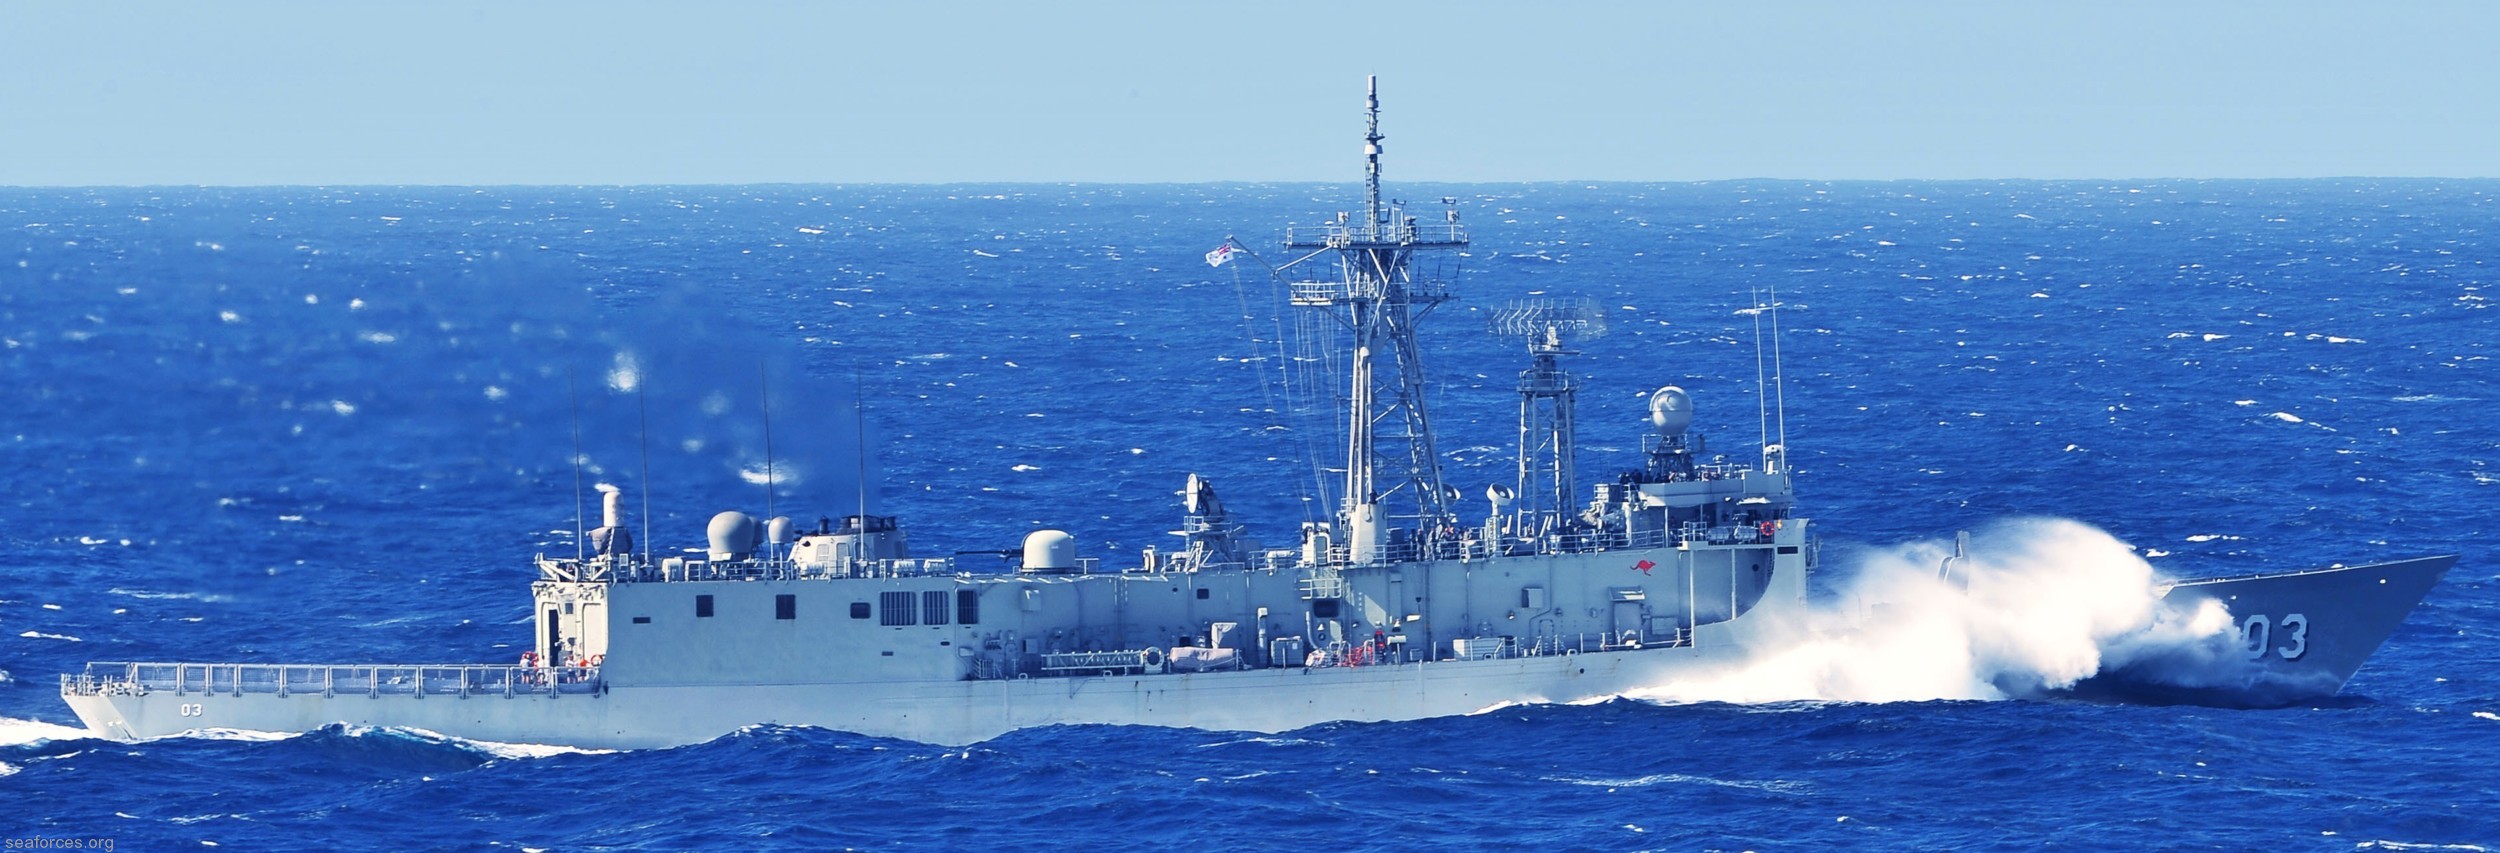 ffg-03 hmas sydney adelaide class frigate royal australian navy 2013 19